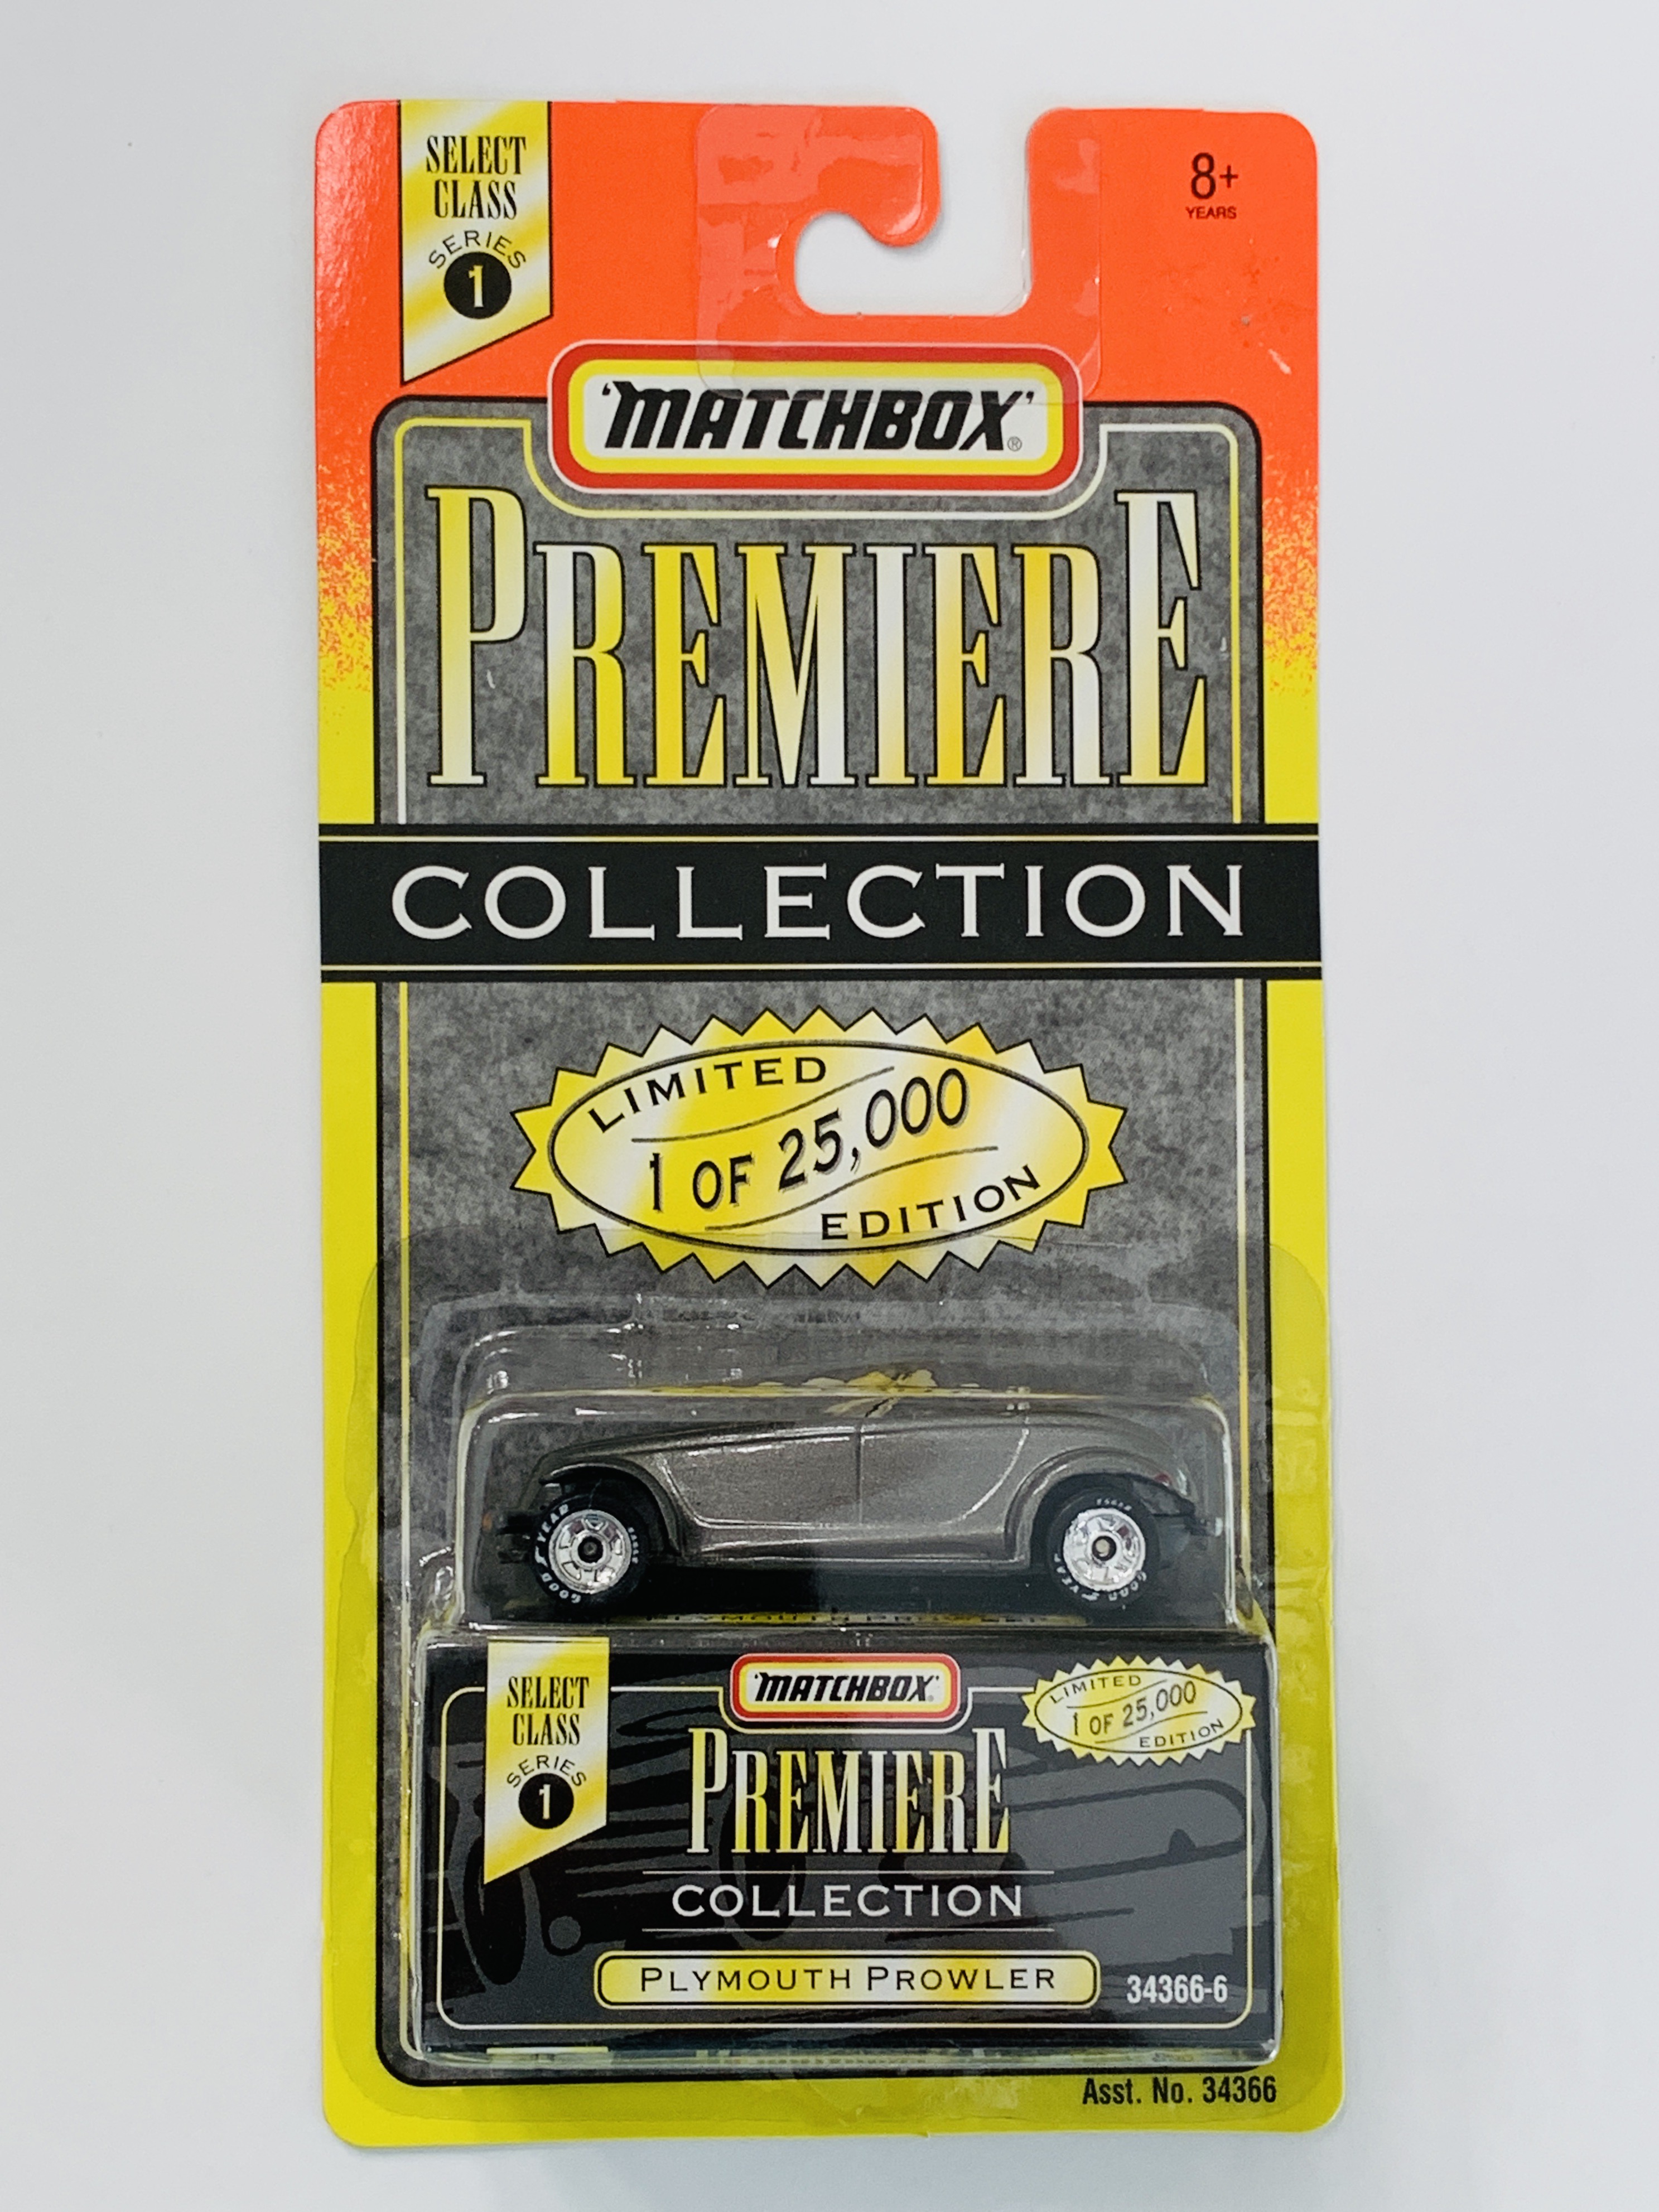 Matchbox Premiere Select Class Plymouth Prowler